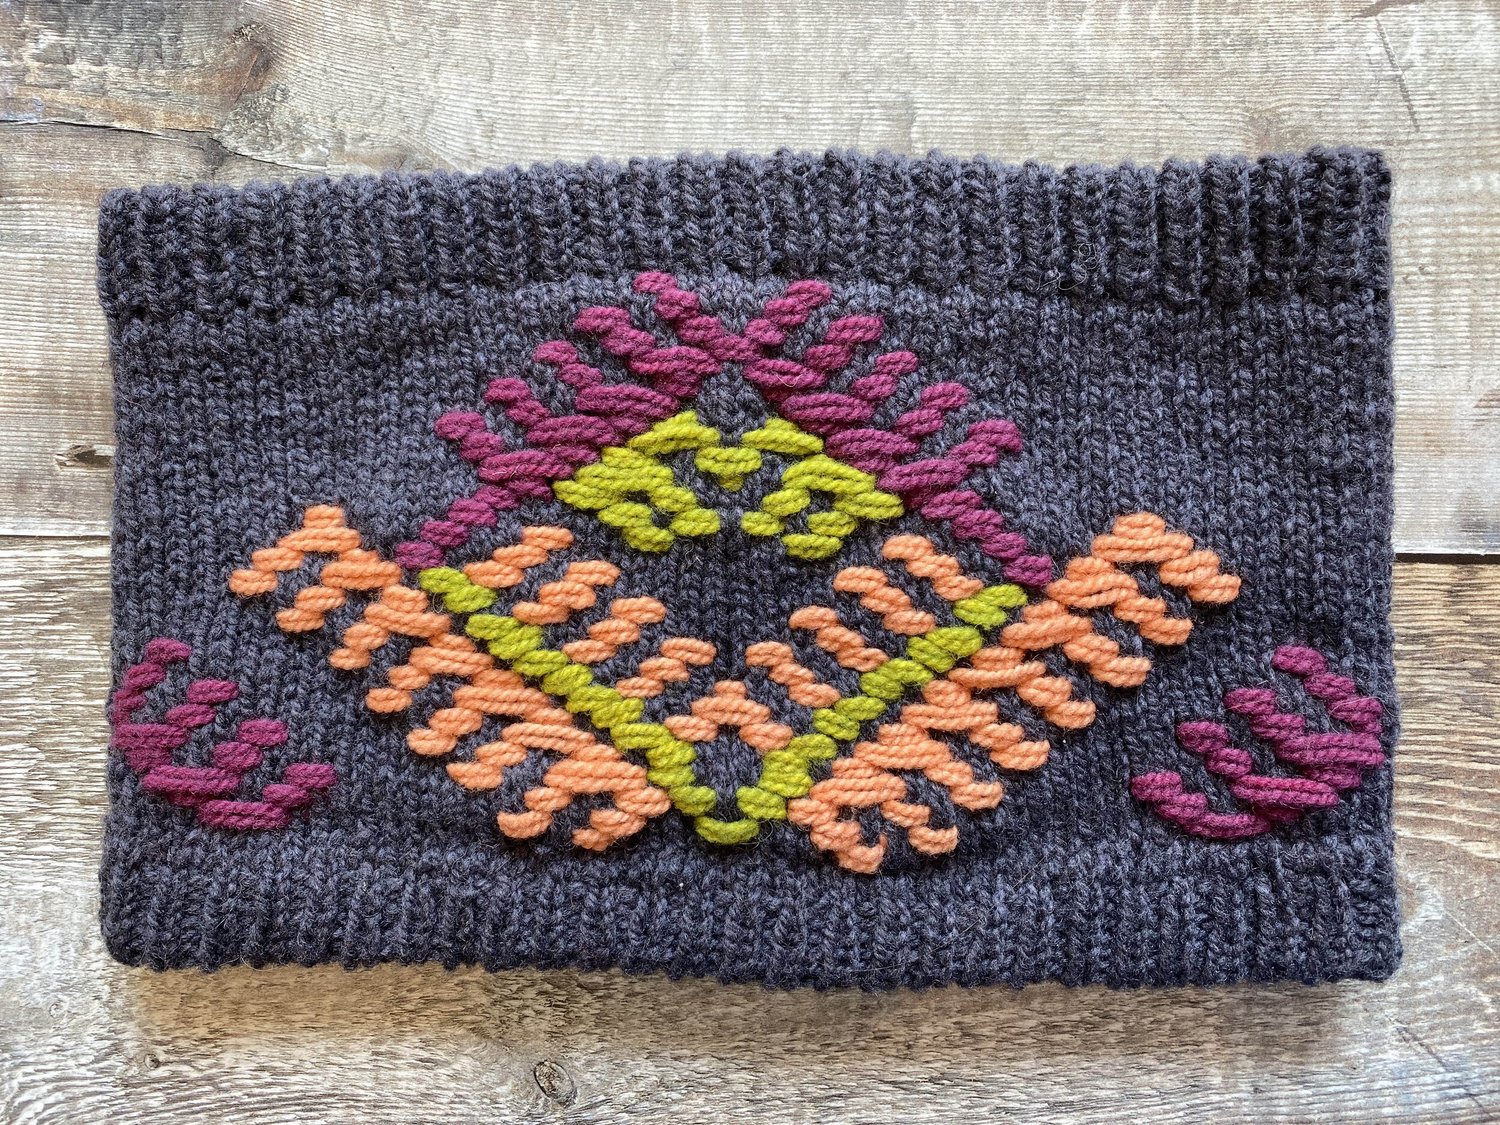 Lildog Blog: Lucet patterns  Lucet, Spool knitting, Card weaving